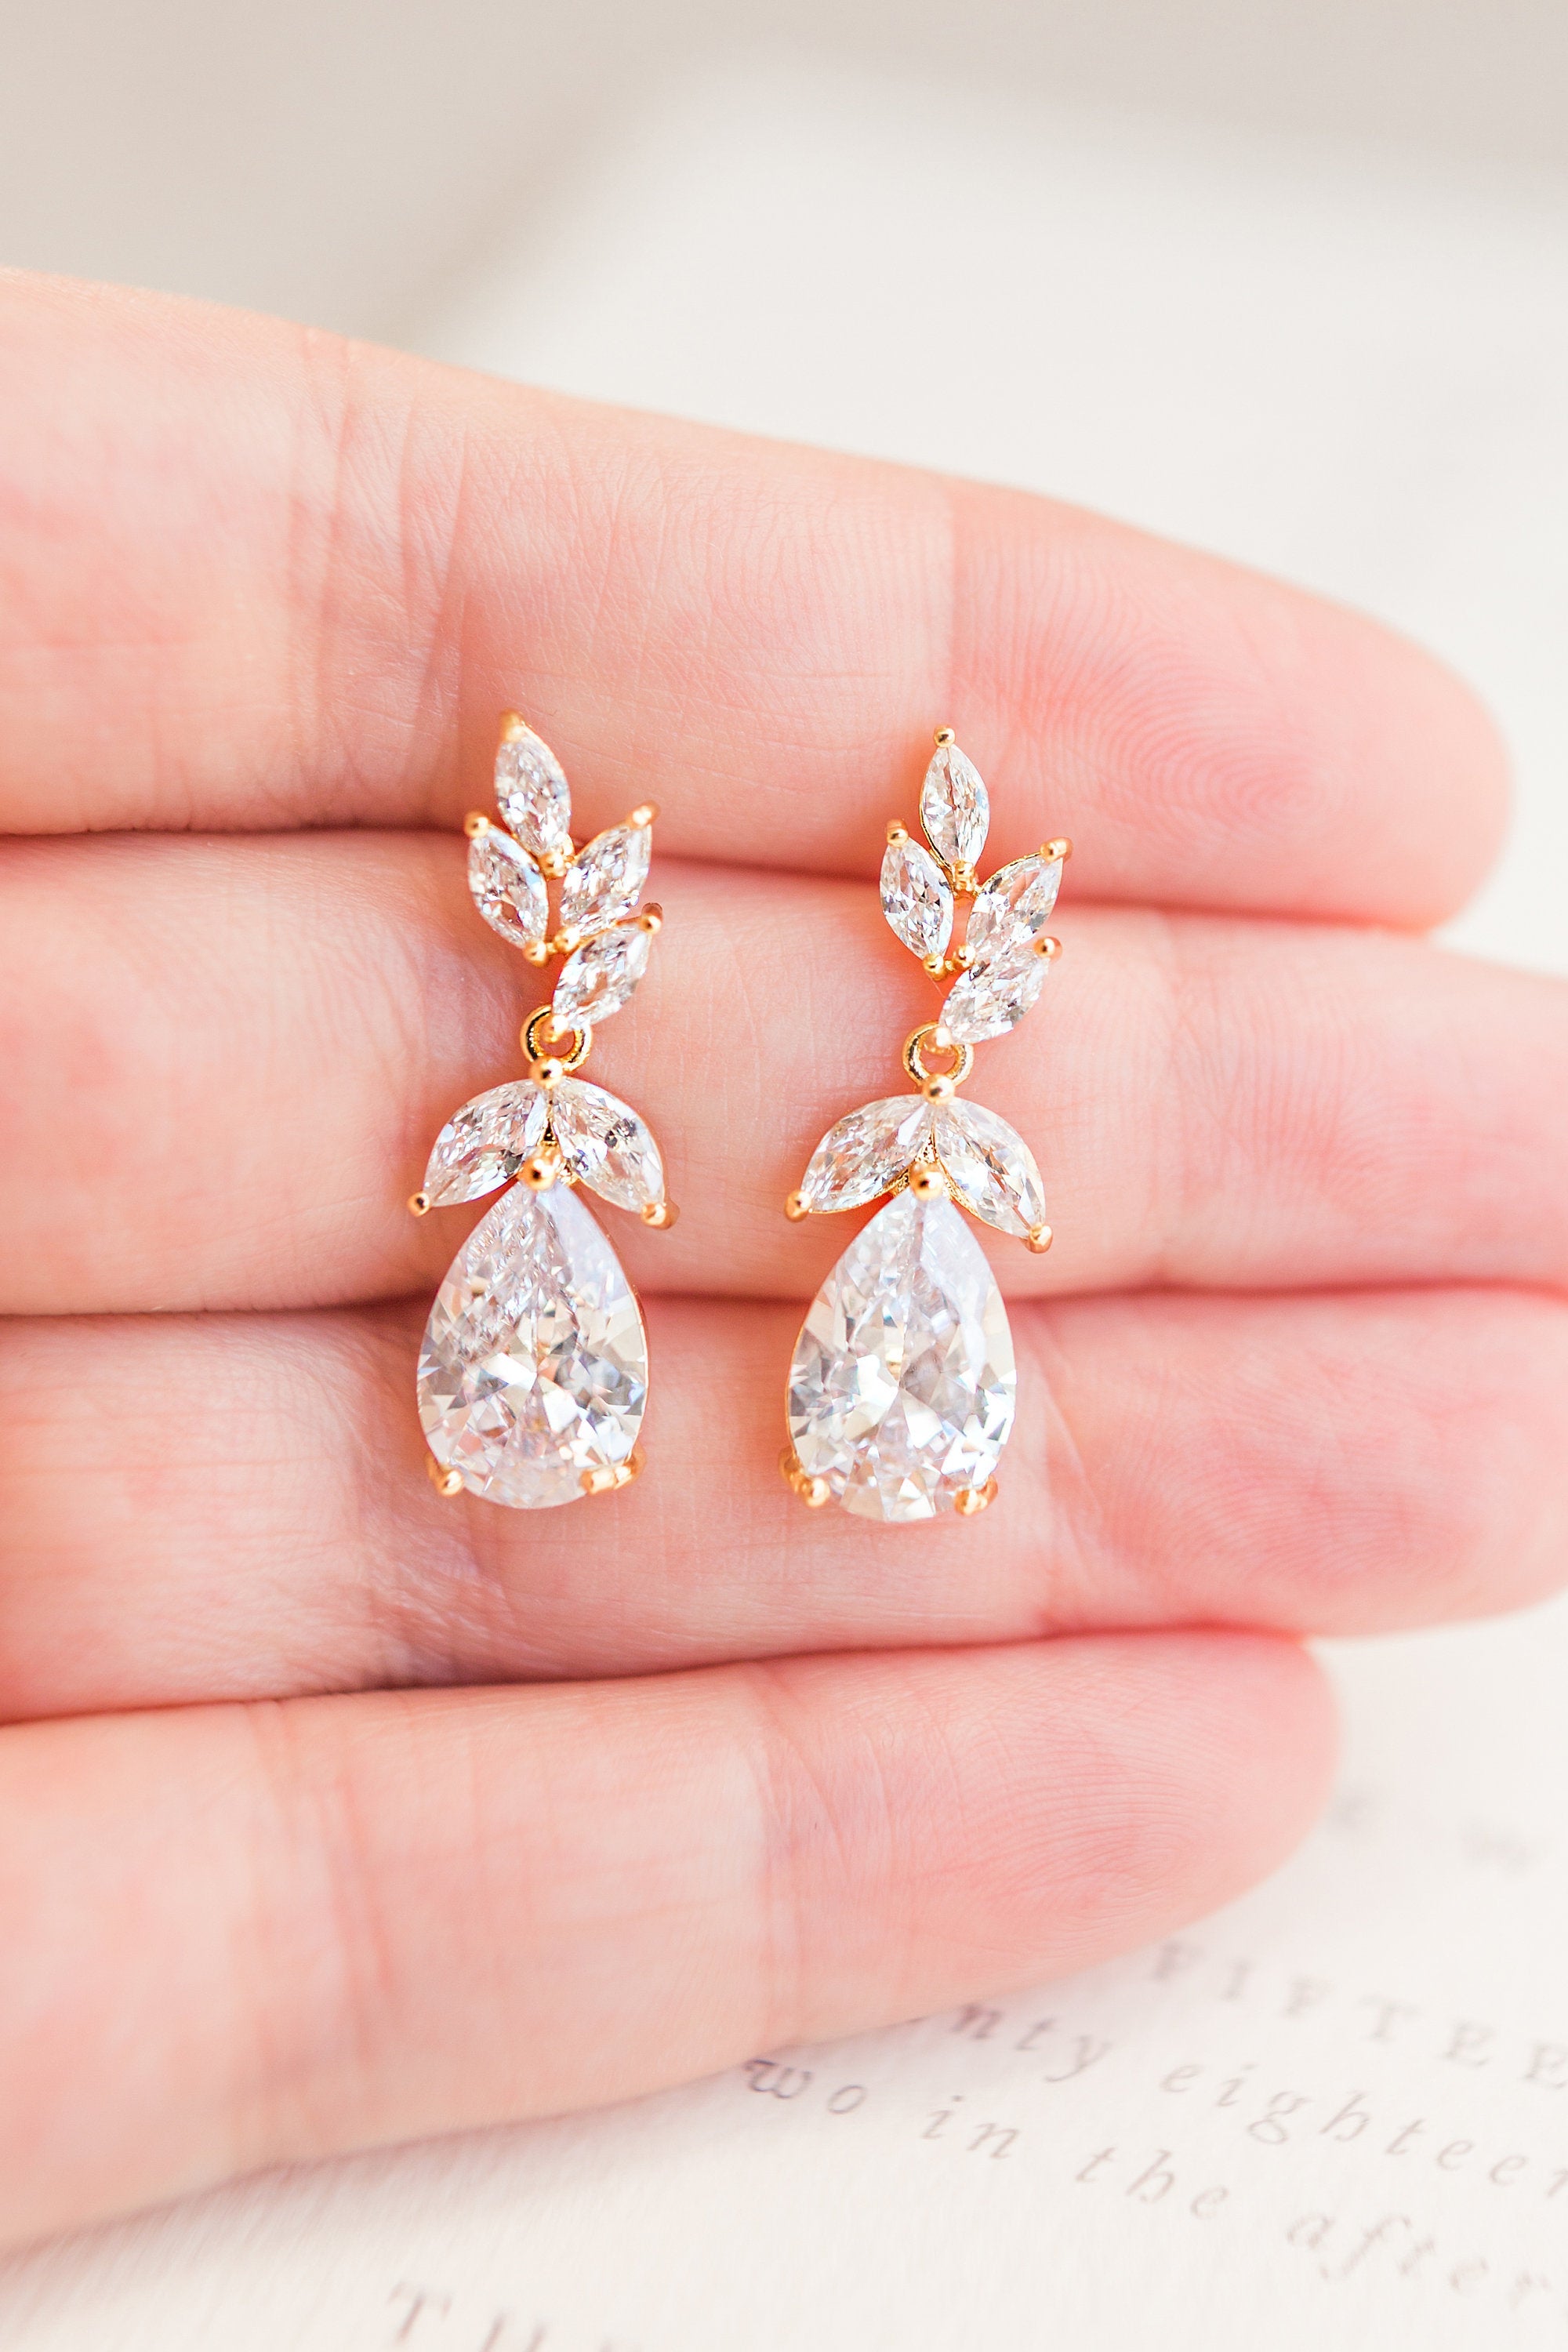 PARIS // Gold crystal drop earrings